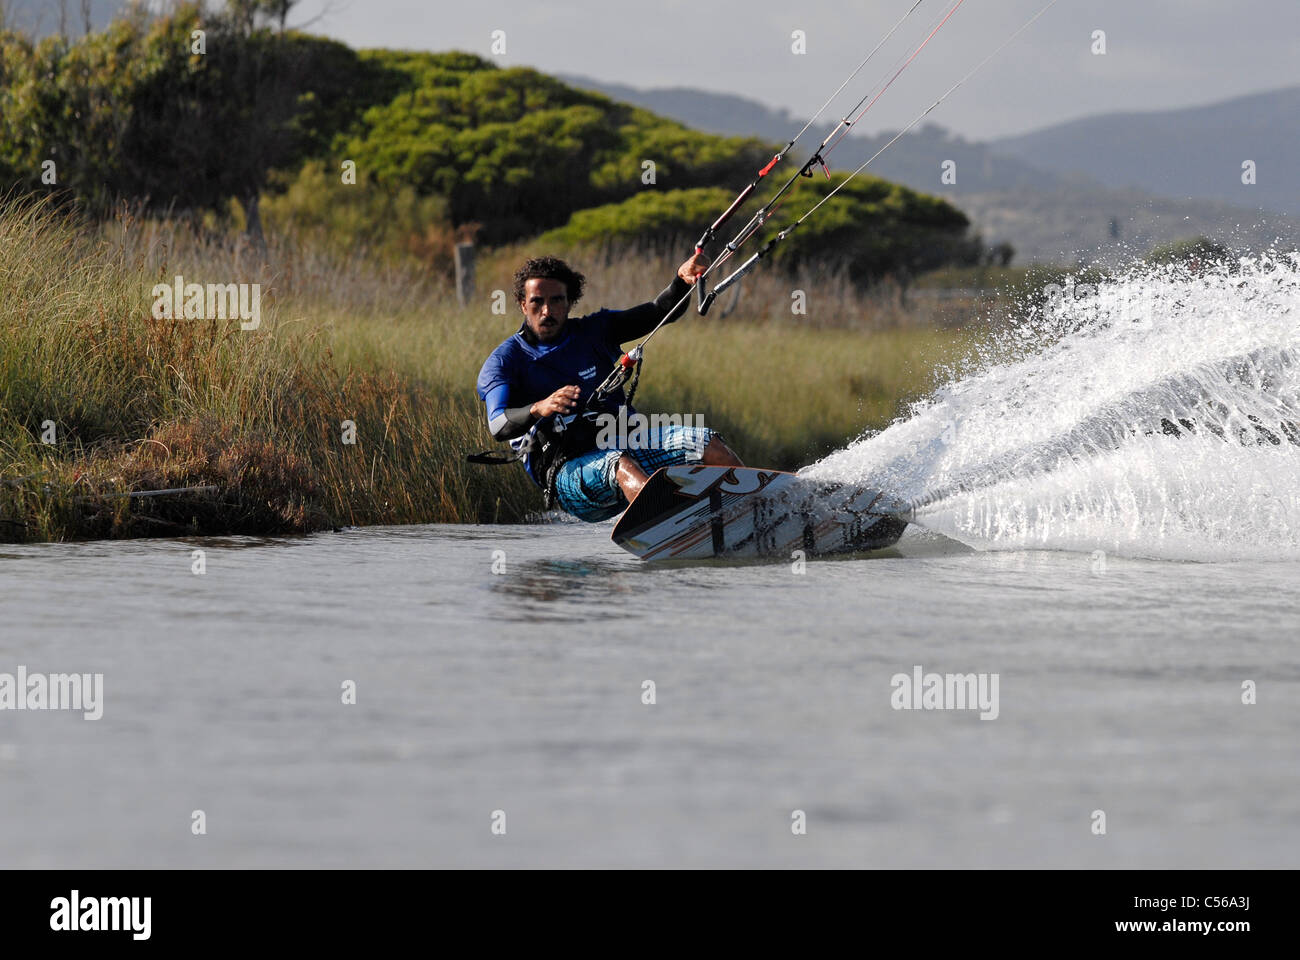 Kite surfing carving vicino al lungofiume Foto Stock